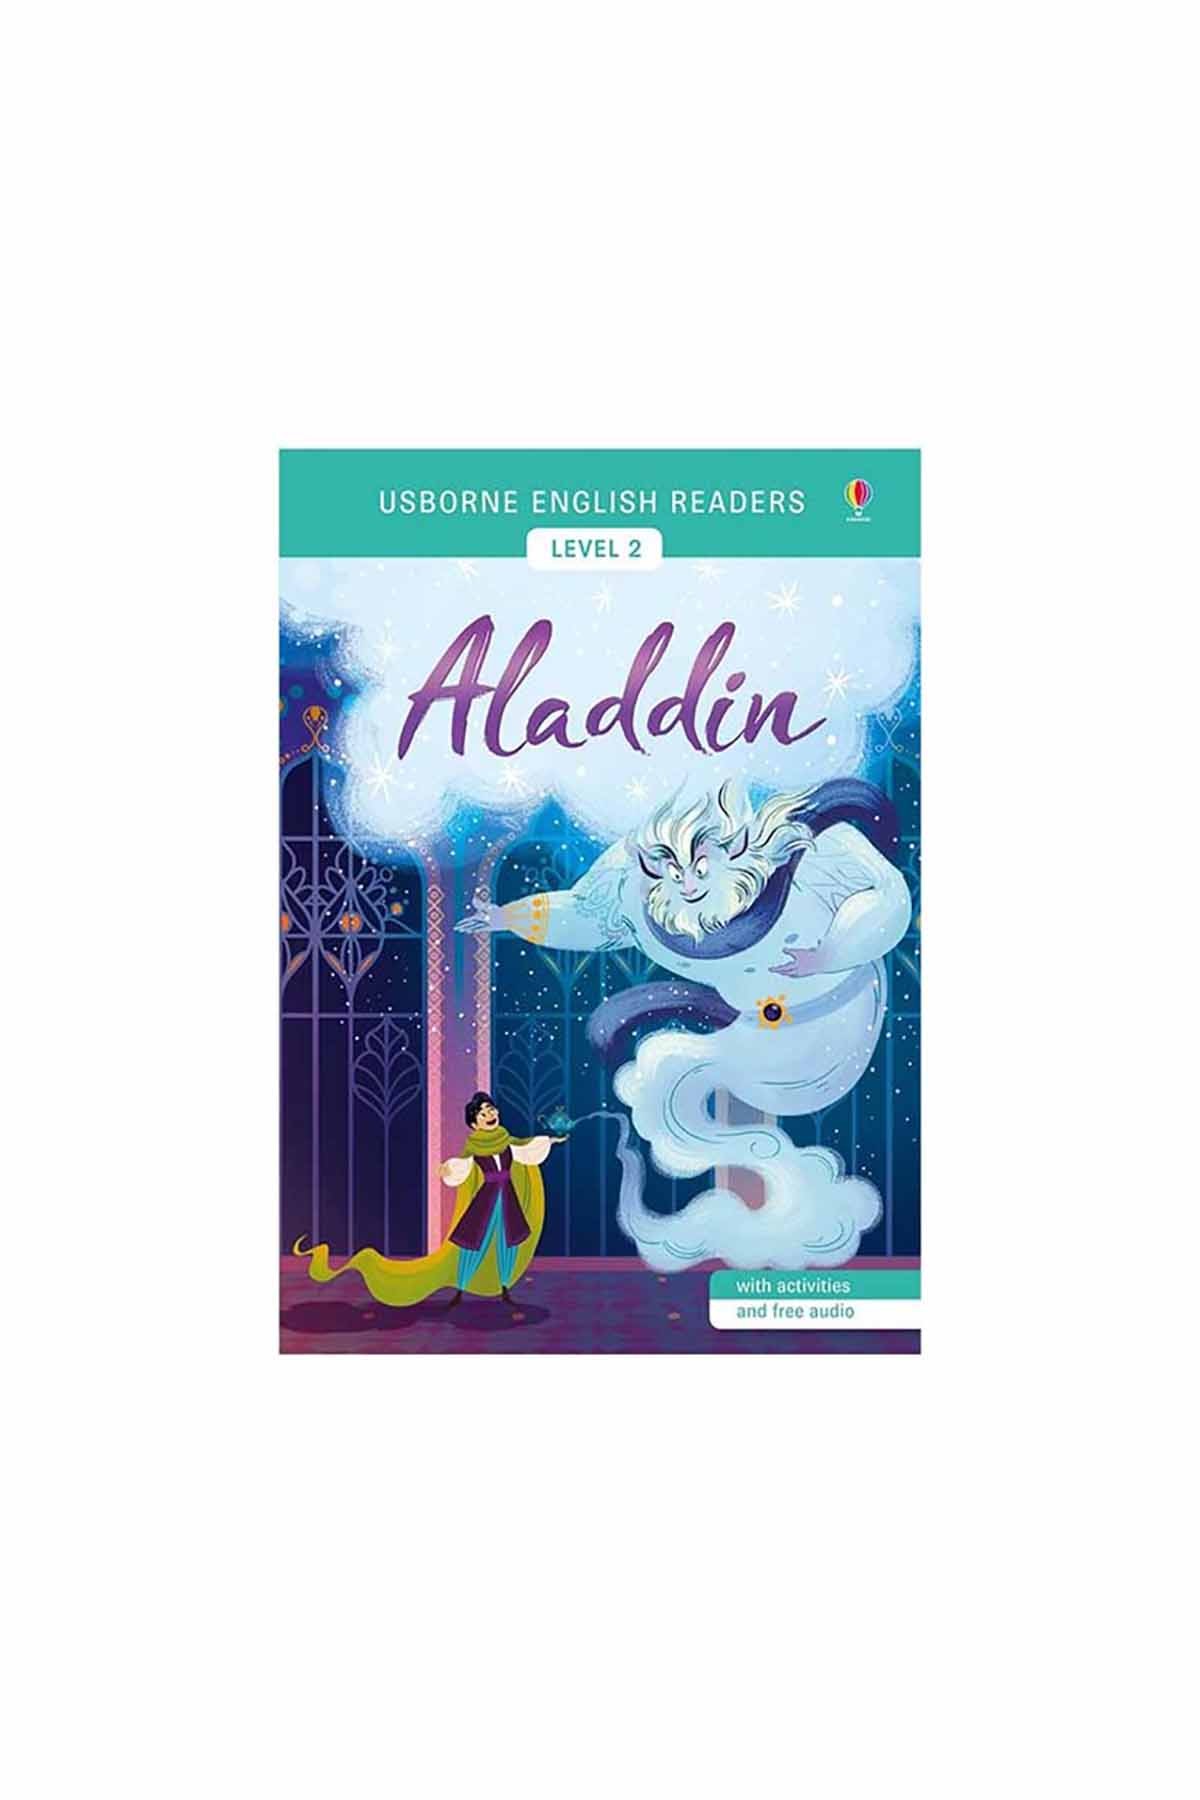 The Usborne Aladdin